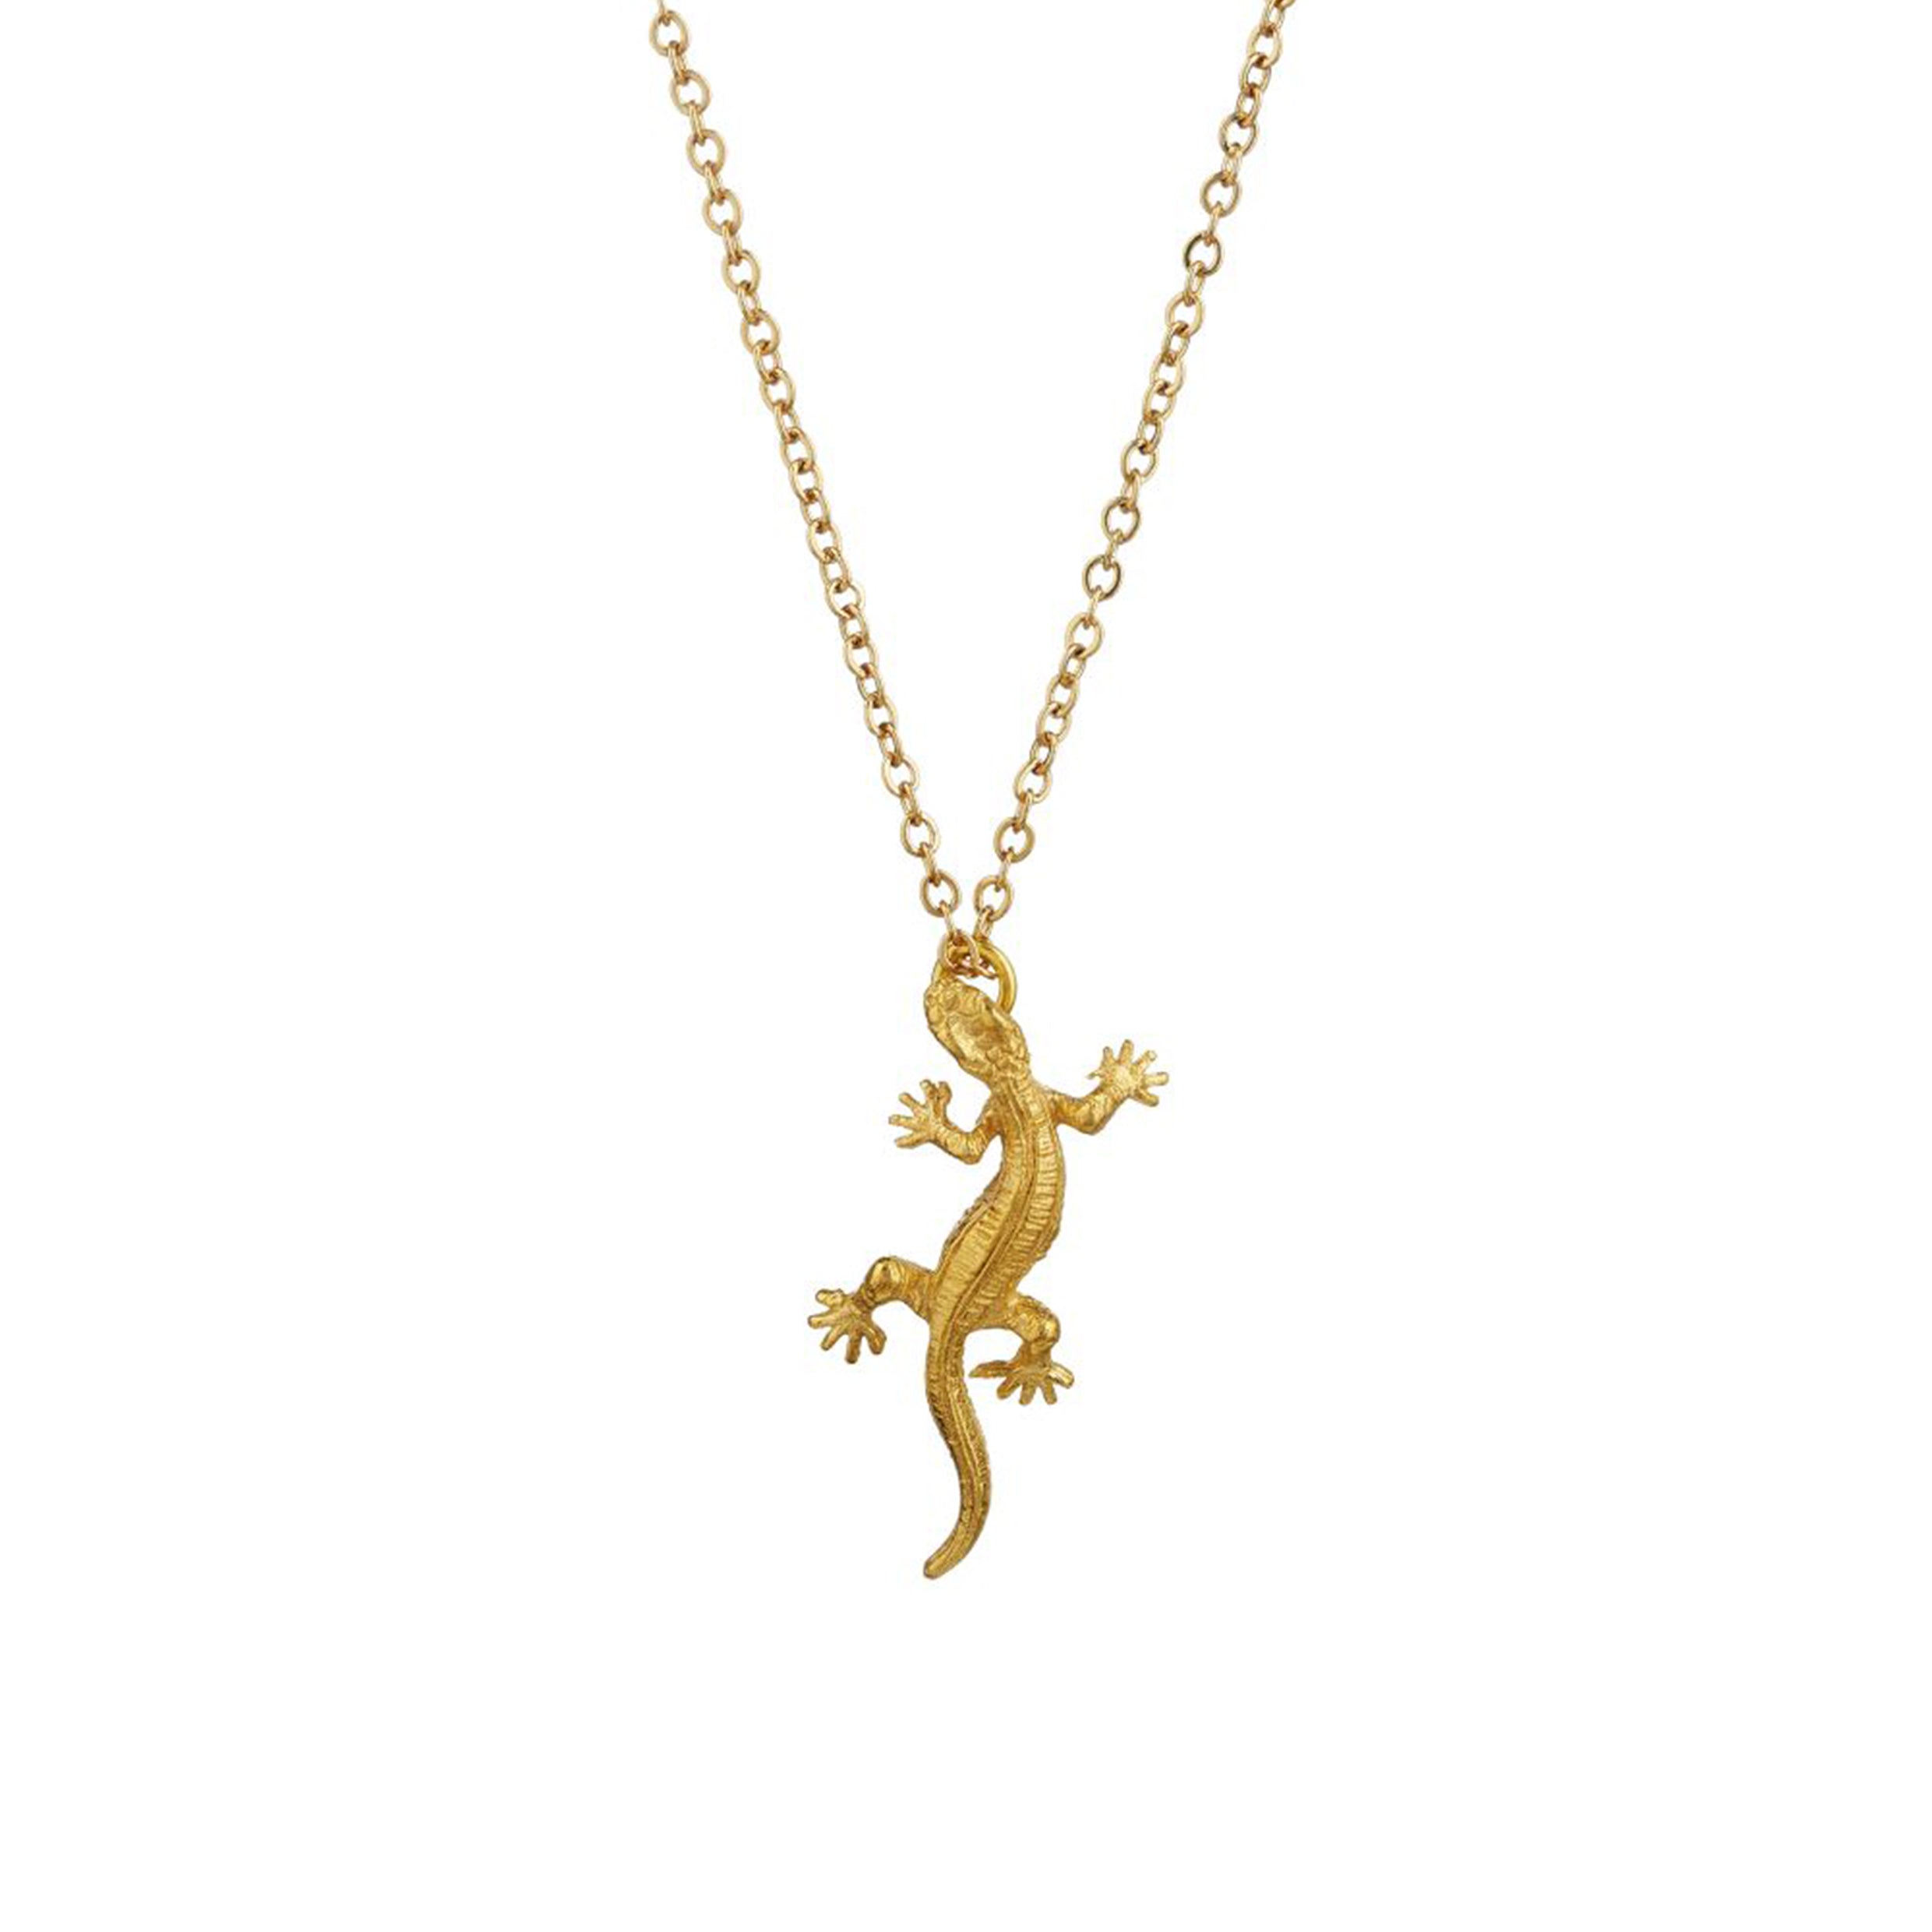 Lizard Charm - Mirabelle Jewellery